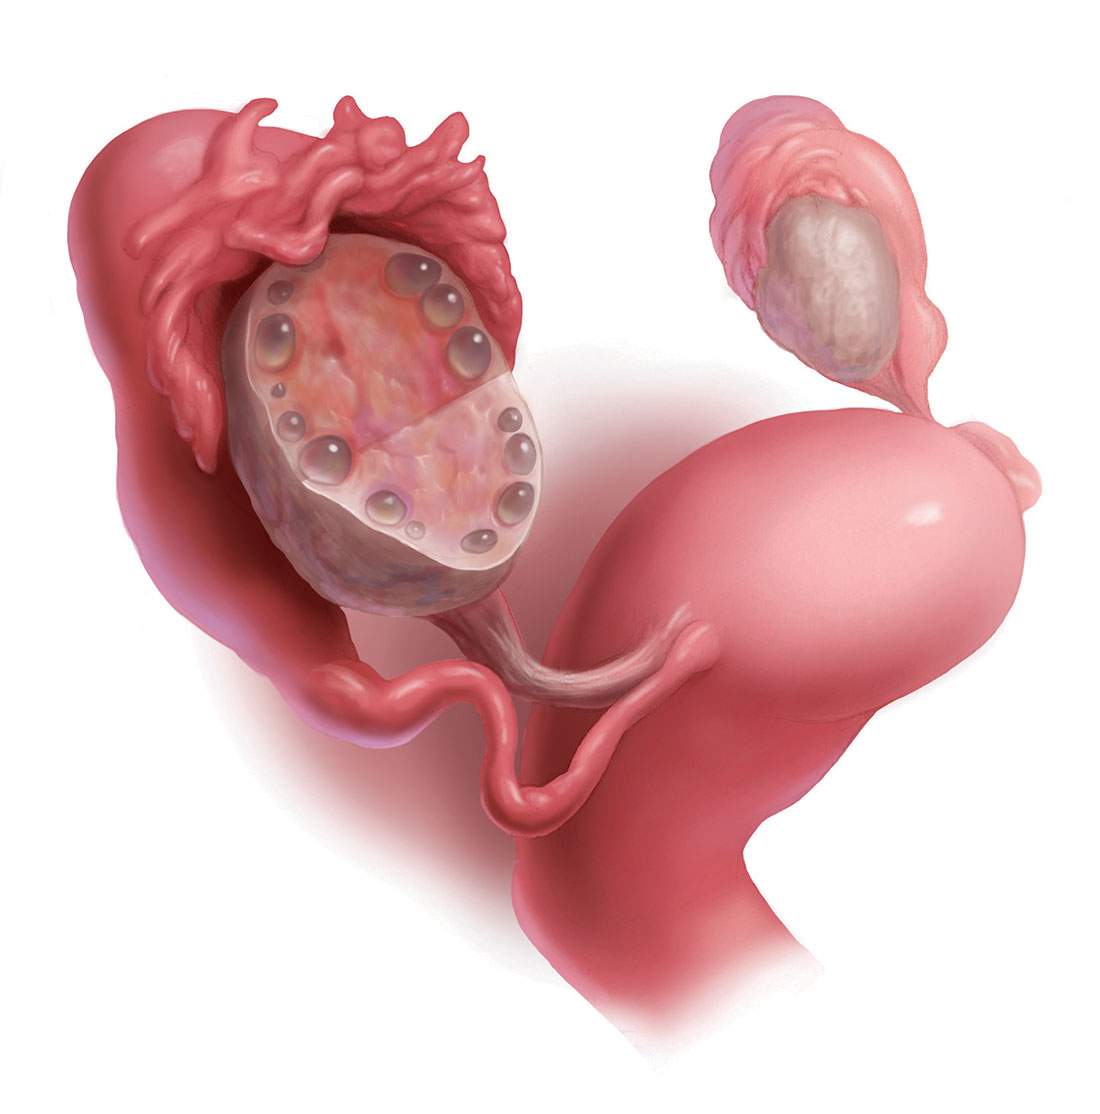 Ovare polichistice – Clinica Medicala Marie Stopes International